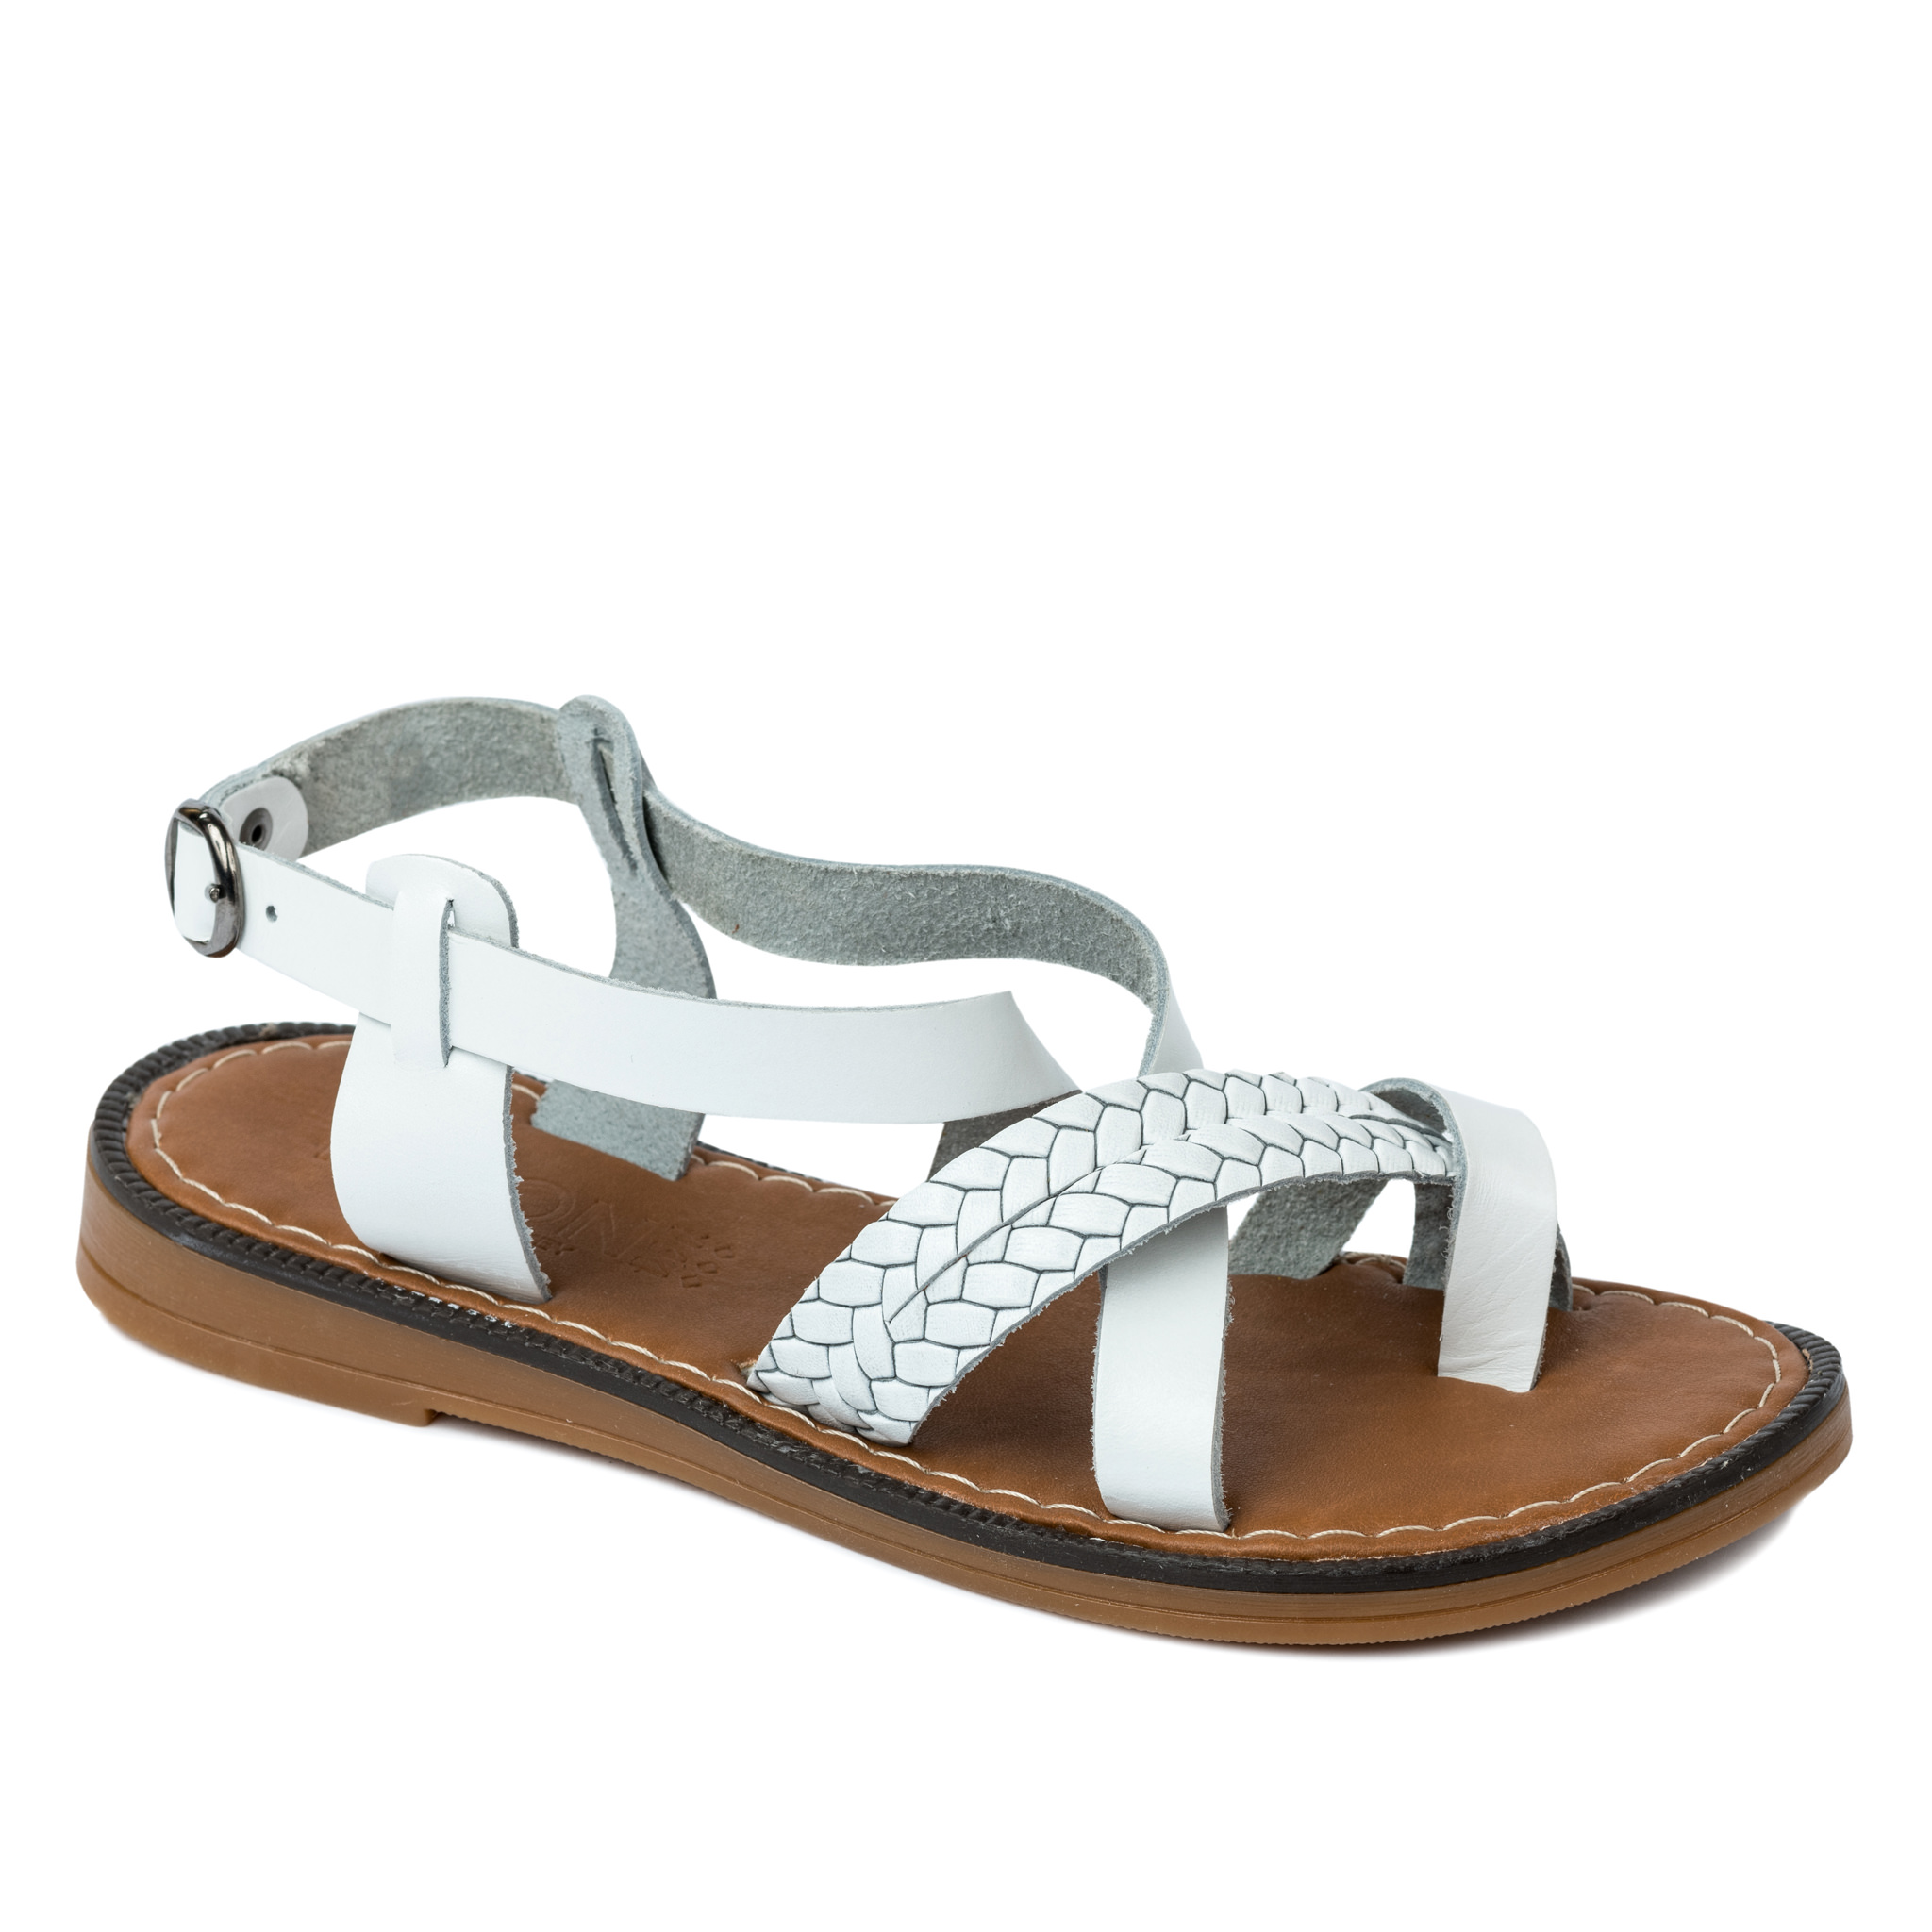 Women sandals A337 - WHITE